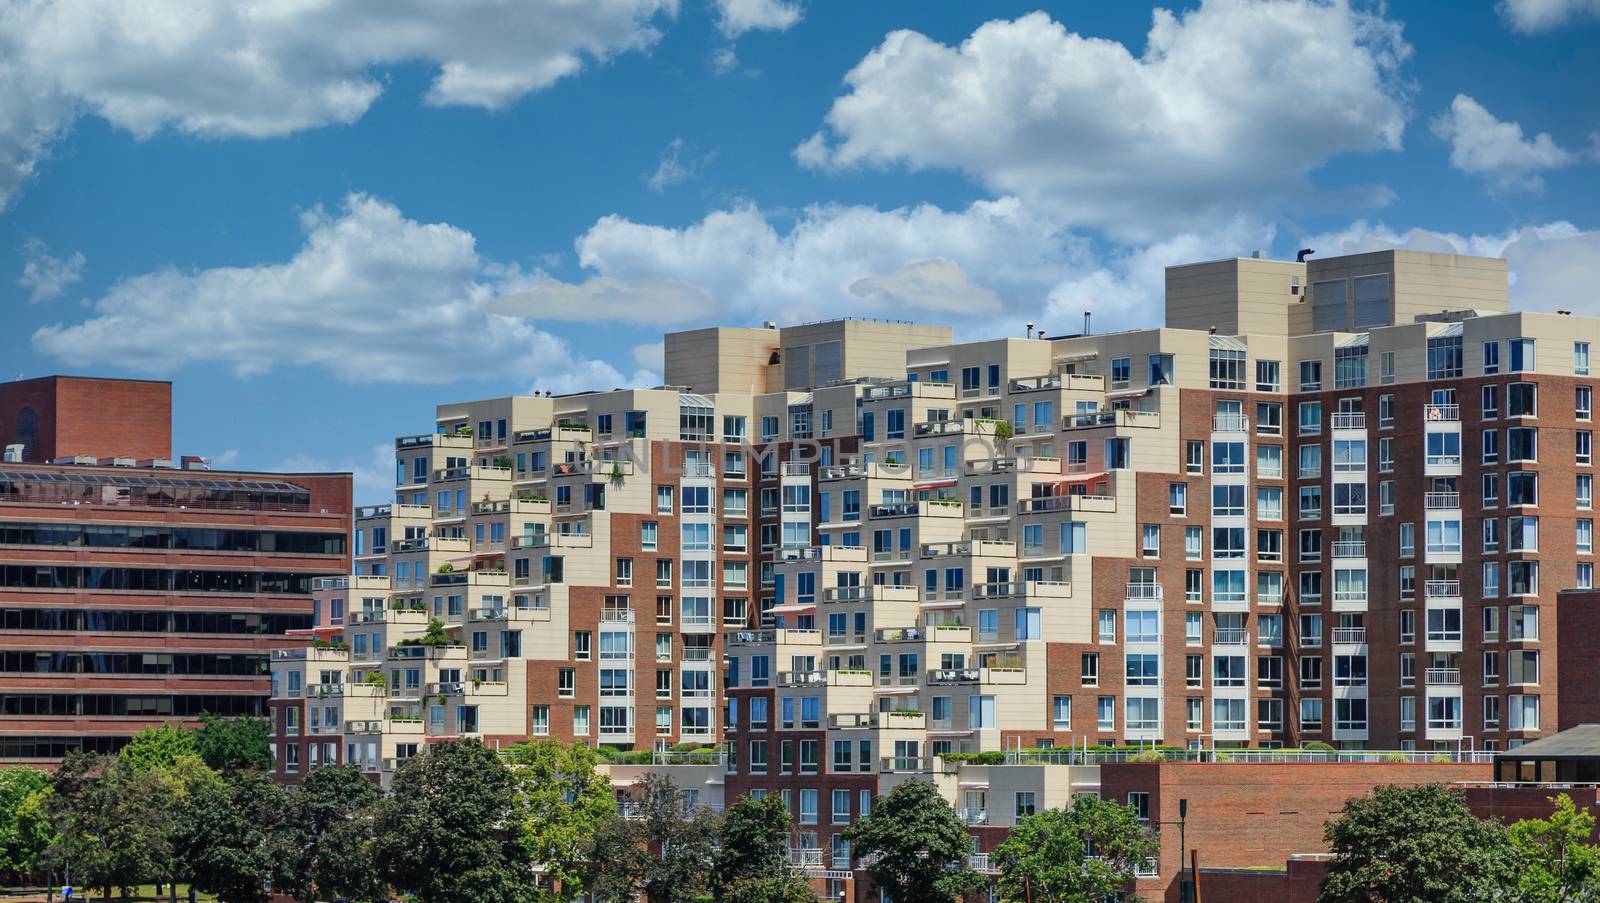 Terraced Condo Buildings in Boston by dbvirago